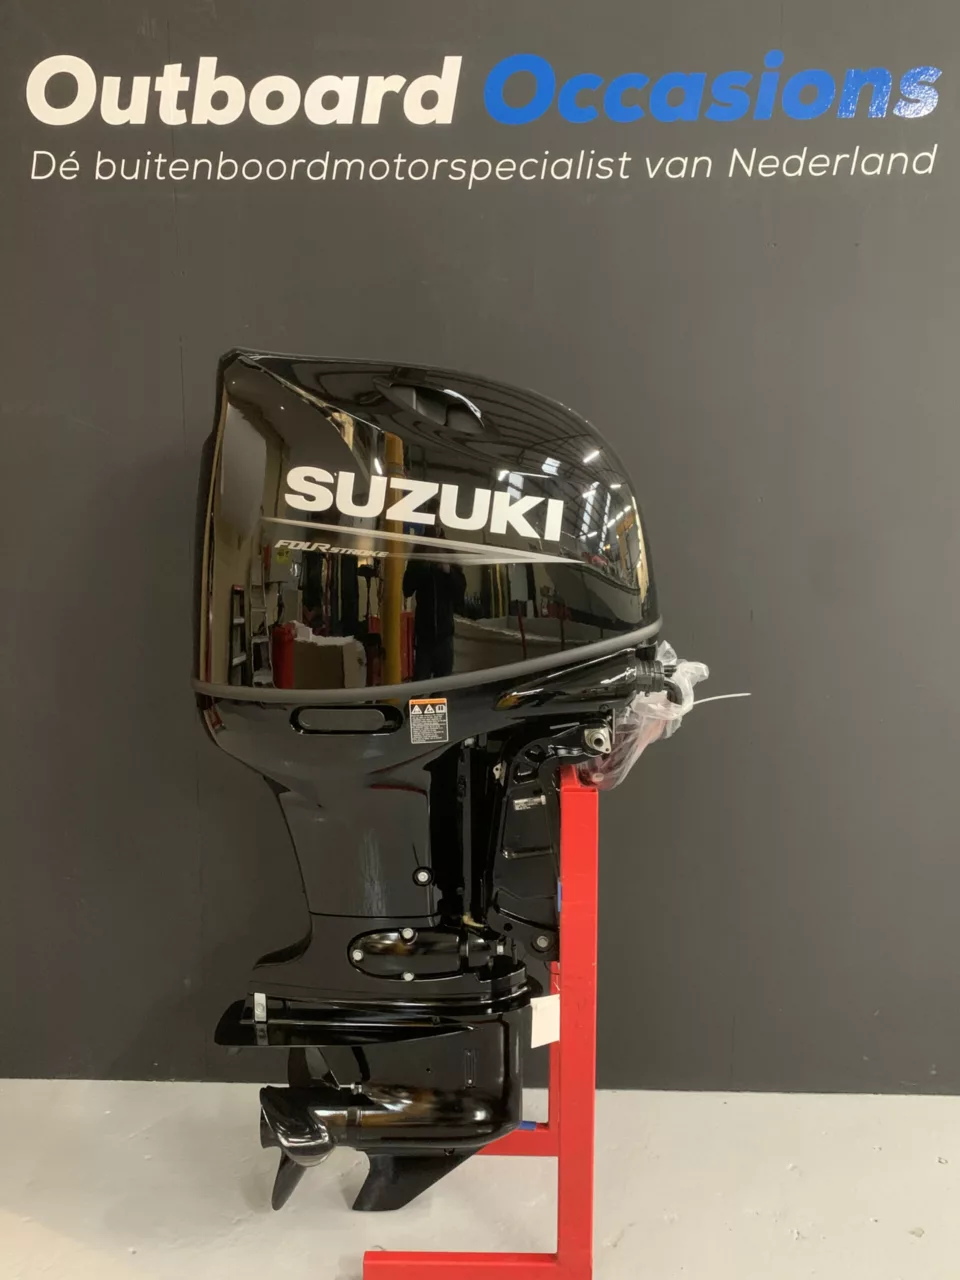 Suzuki 140 PK EFI outboard engine